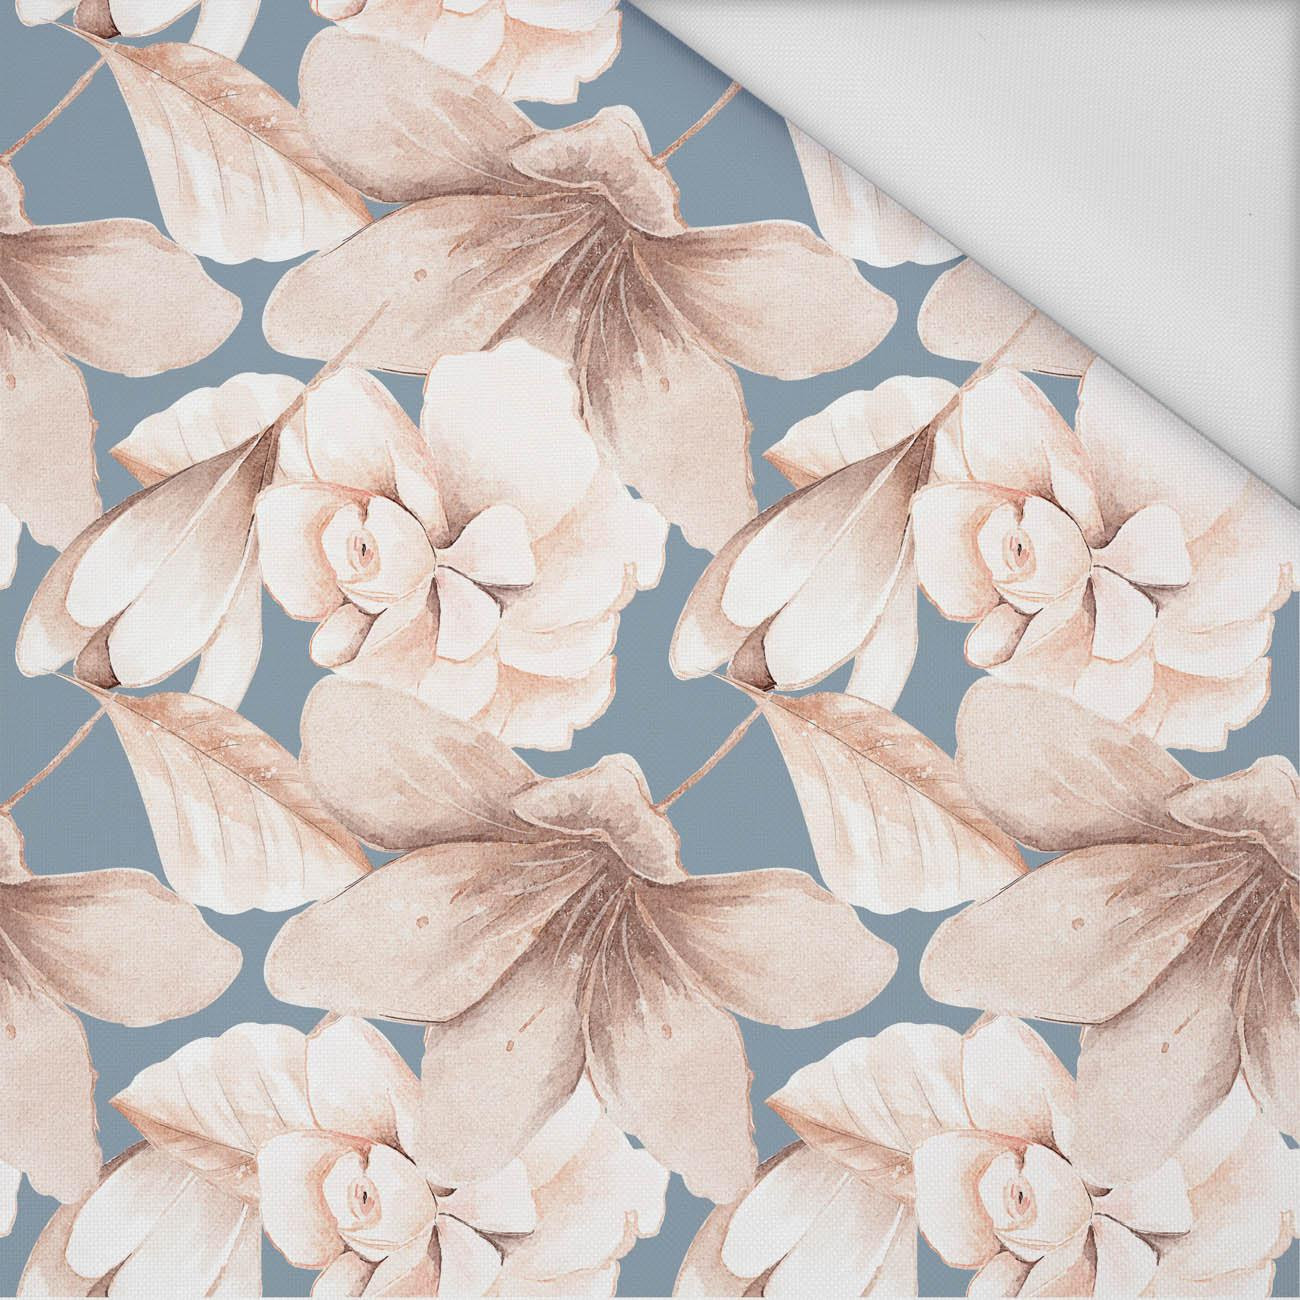 RETRO FLOWERS pat. 2 - Waterproof woven fabric